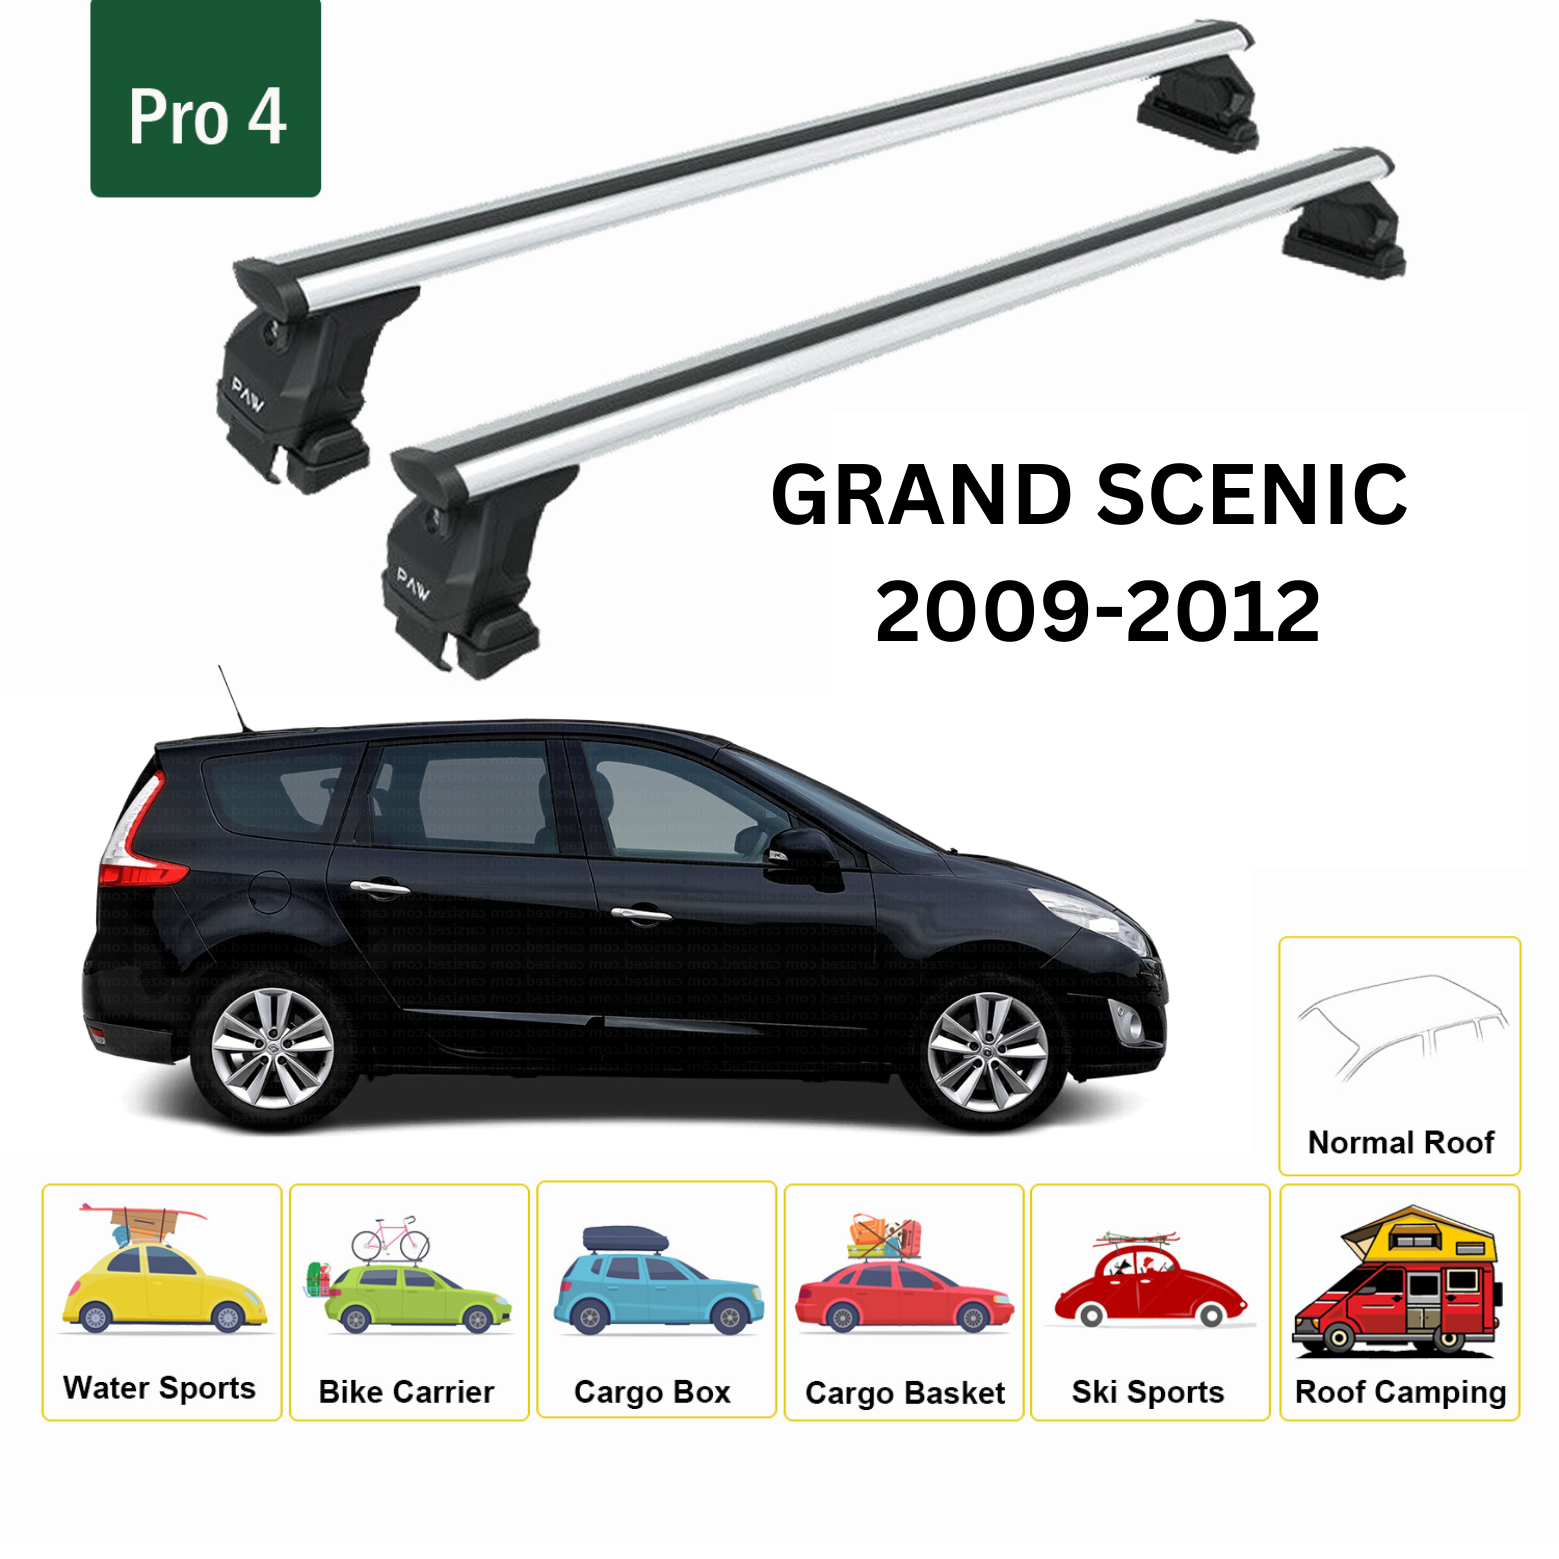 For Renault Grand Scenic 2009-2012 Roof Rack System, Aluminium Cross Bar, Metal Bracket, Normal Roof, Silver